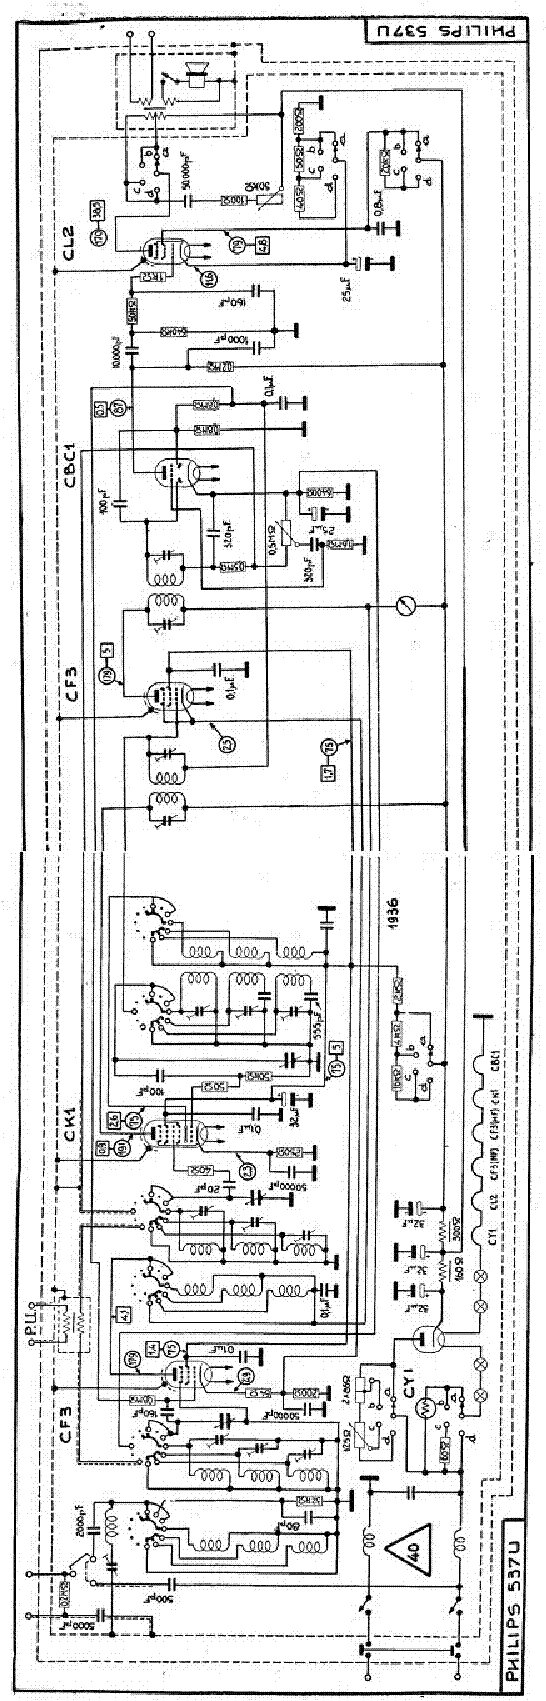 PHILIPS 537U AC-DC RADIO SCH service manual (1st page)